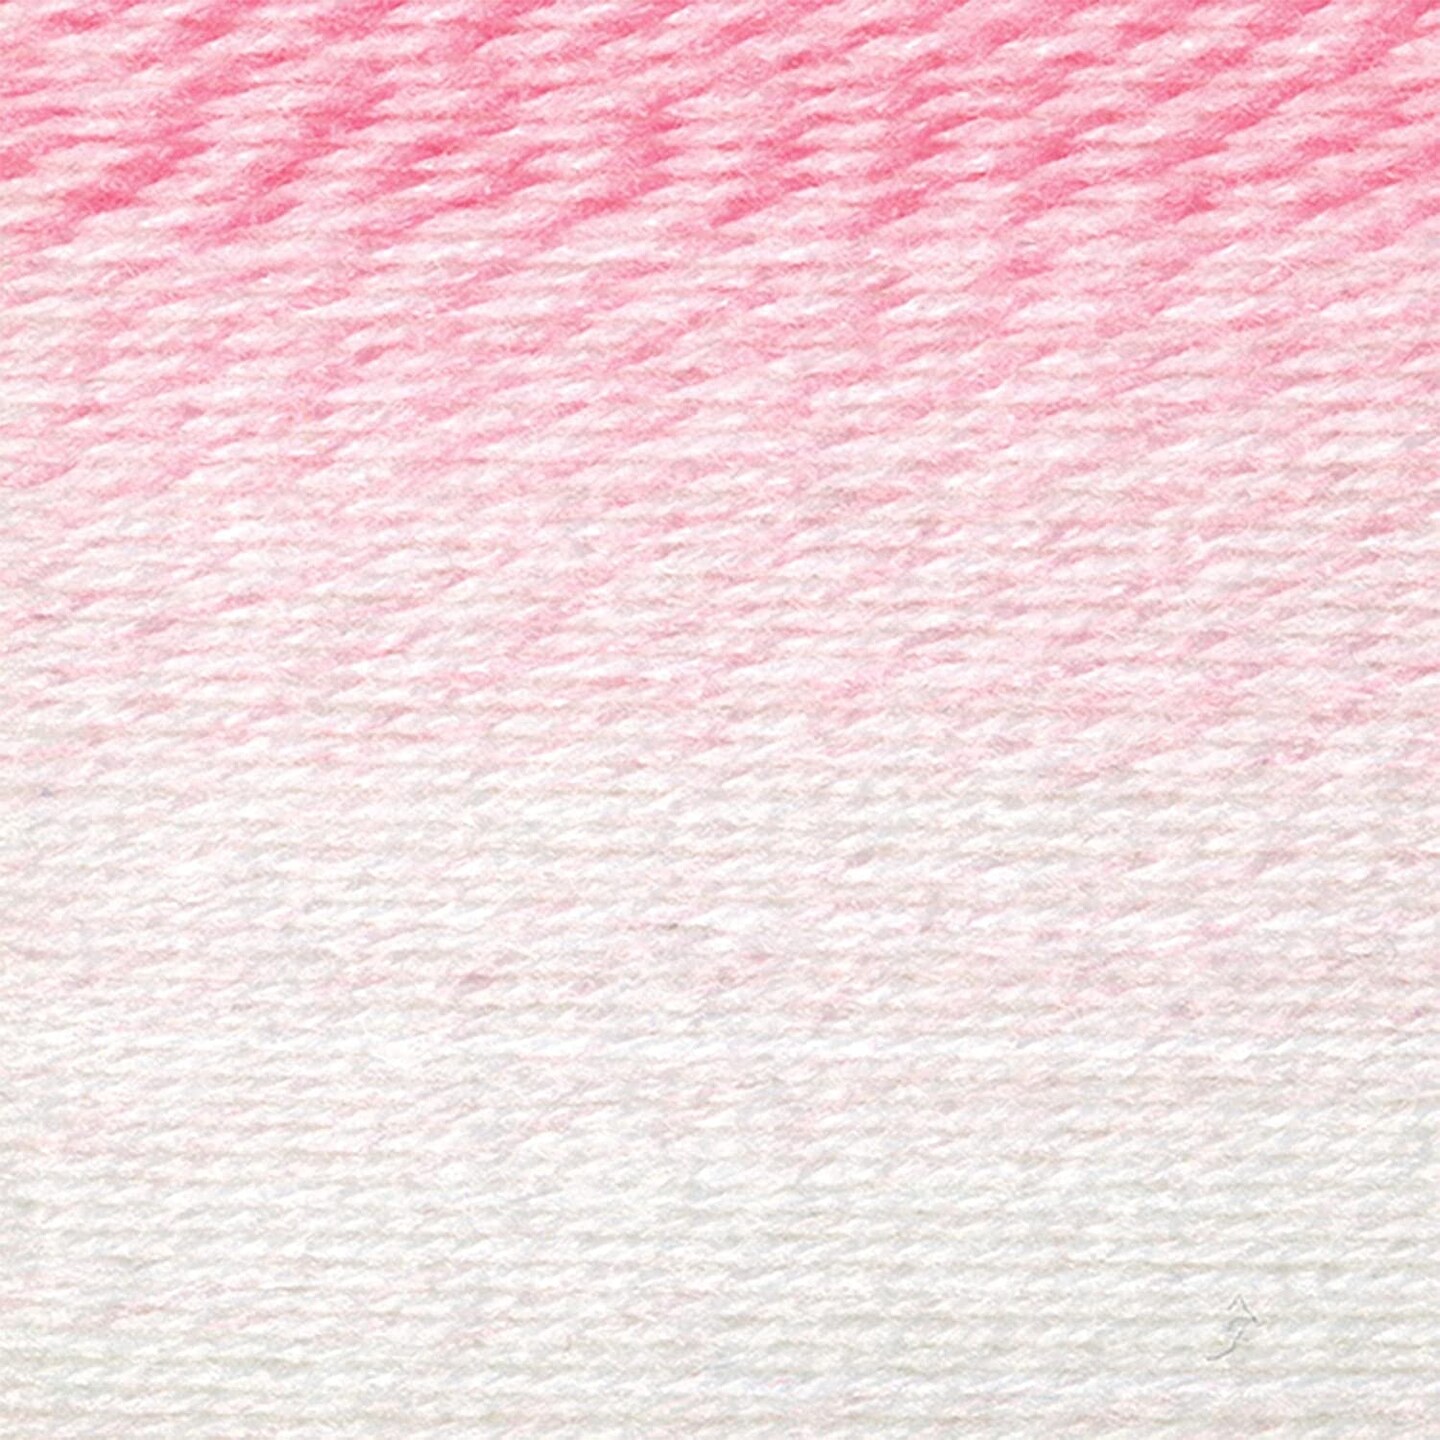 Pink V Stitch Baby Throw Pattern (Crochet) - Version 1 – Lion Brand Yarn